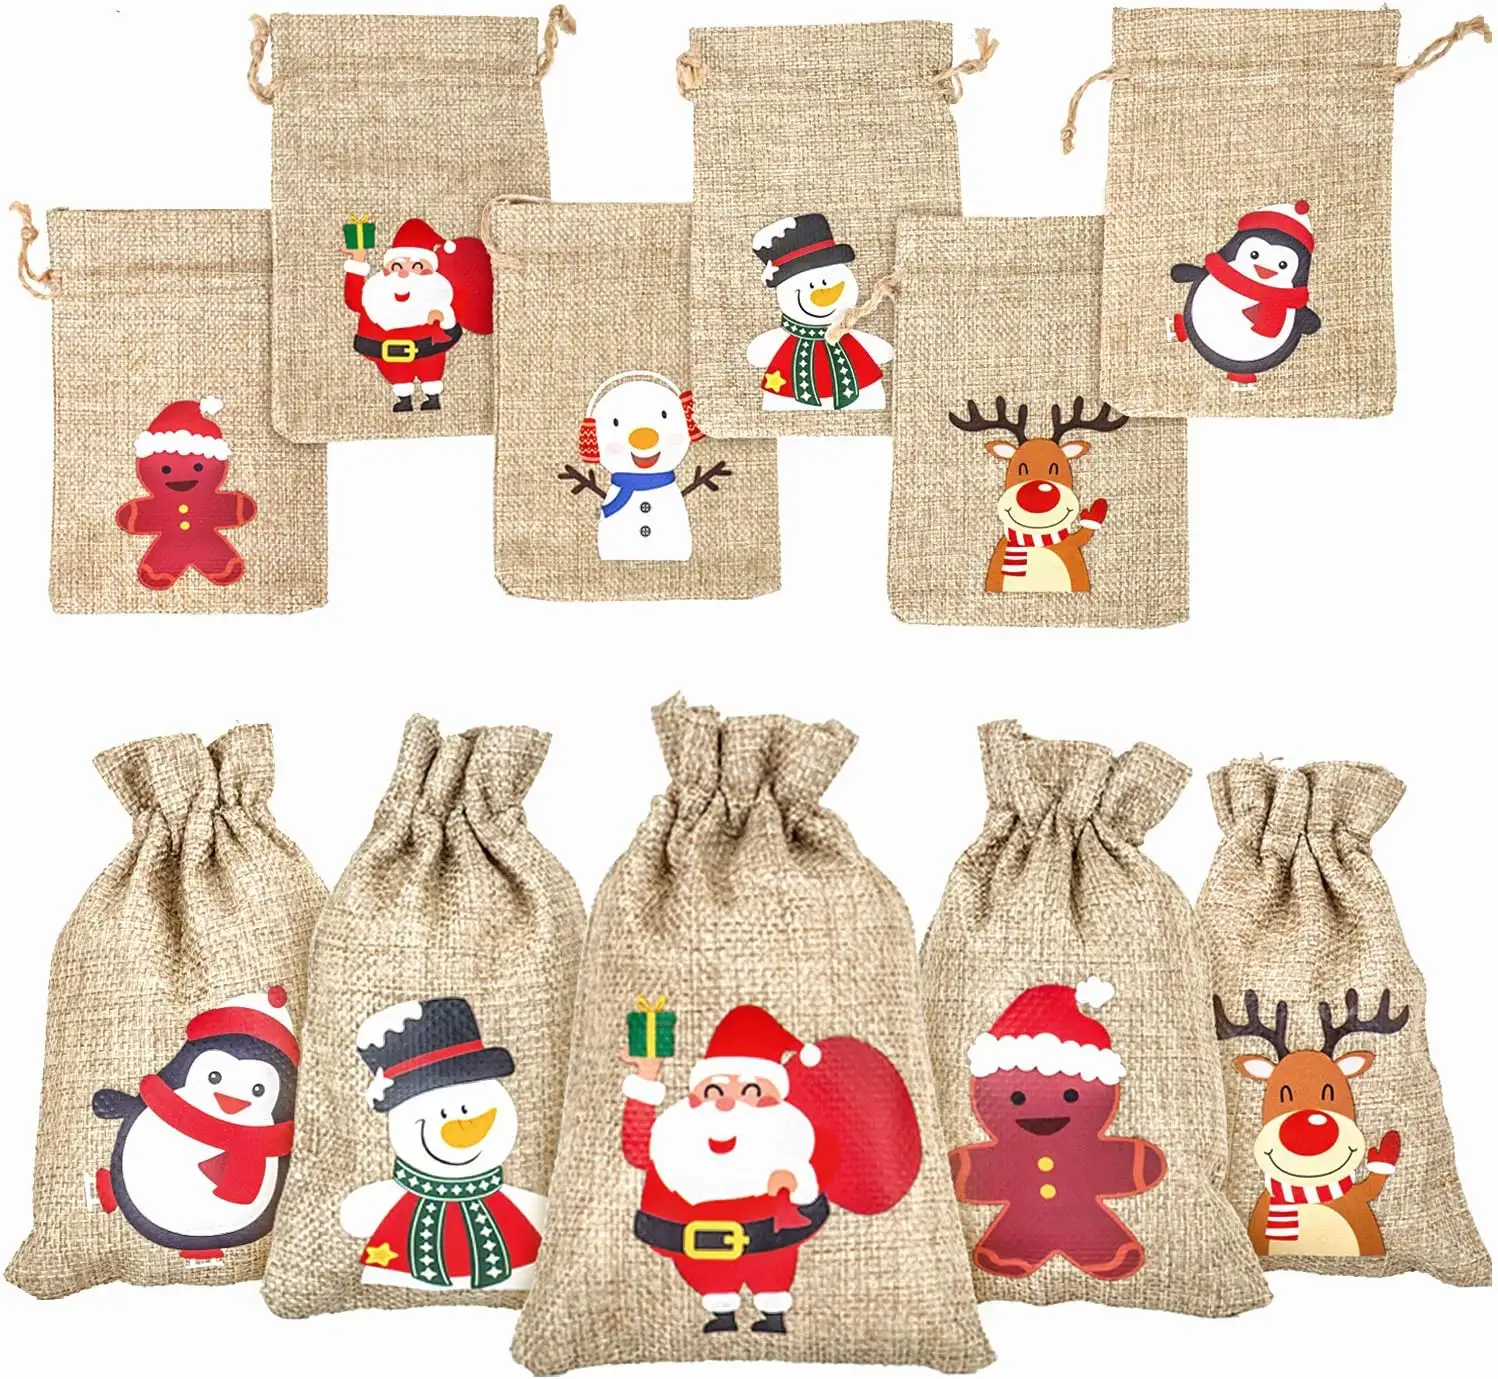 Wholesale Small Craft Jute Goodie Bags Reusable Sacks Drawstring Presents Bag Christmas Burlap Gift Bags With Drawstrings